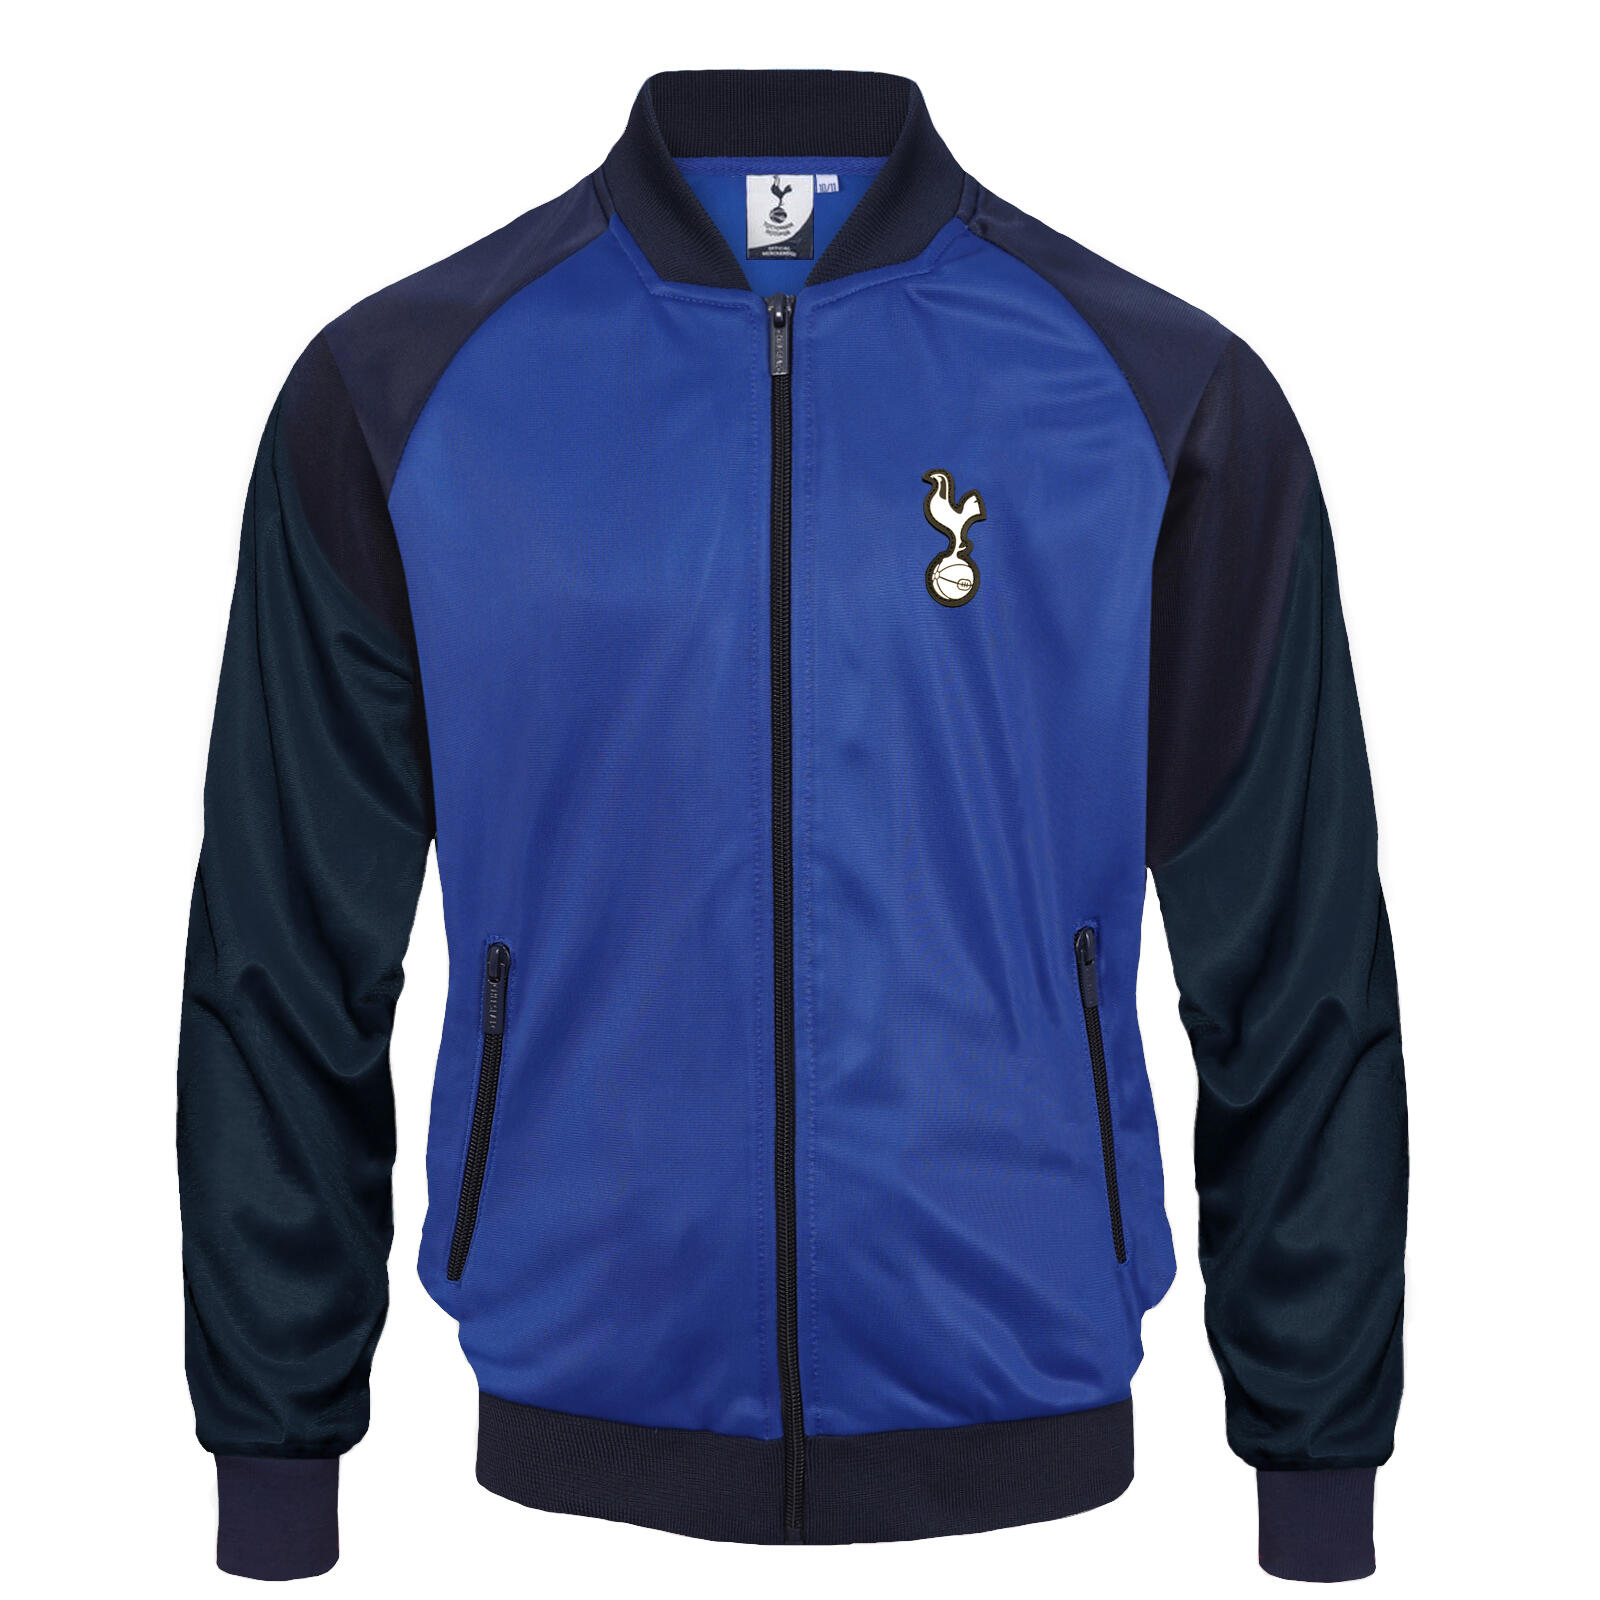 TOTTENHAM HOTSPUR Tottenham Hotspur Boys Jacket Track Top Retro OFFICIAL Football Gift